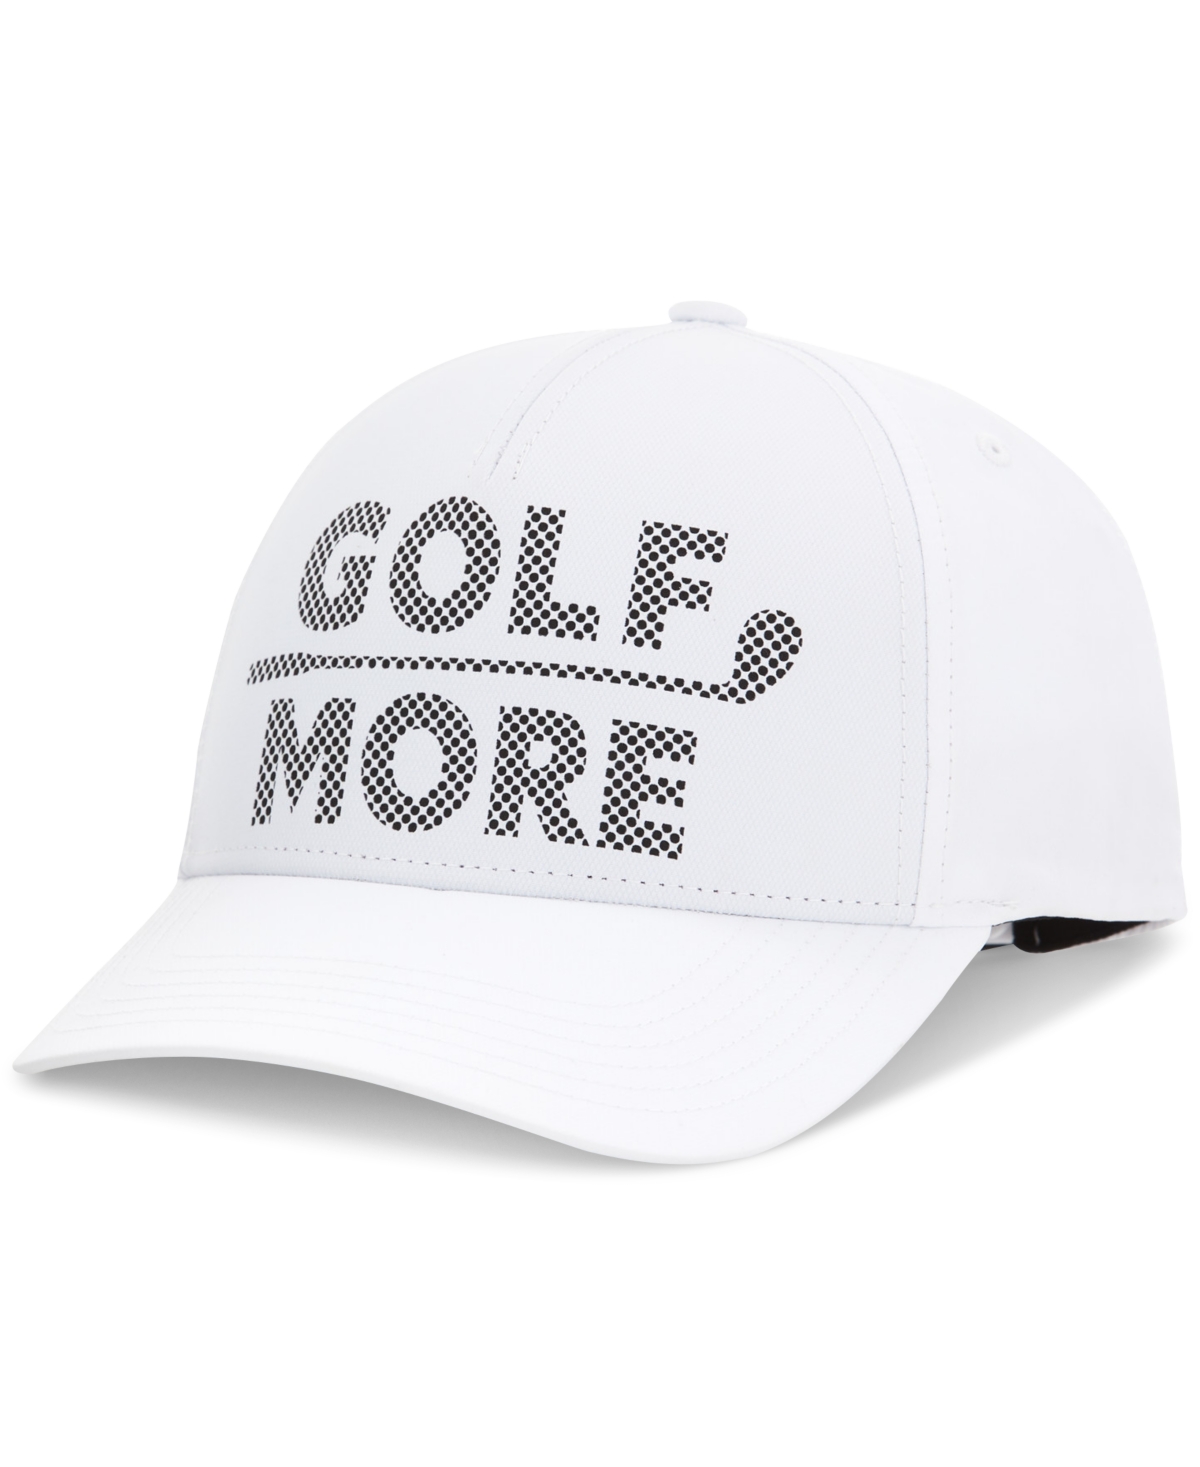 Men's Golf More Perforated Golf Cap - Bright Whi